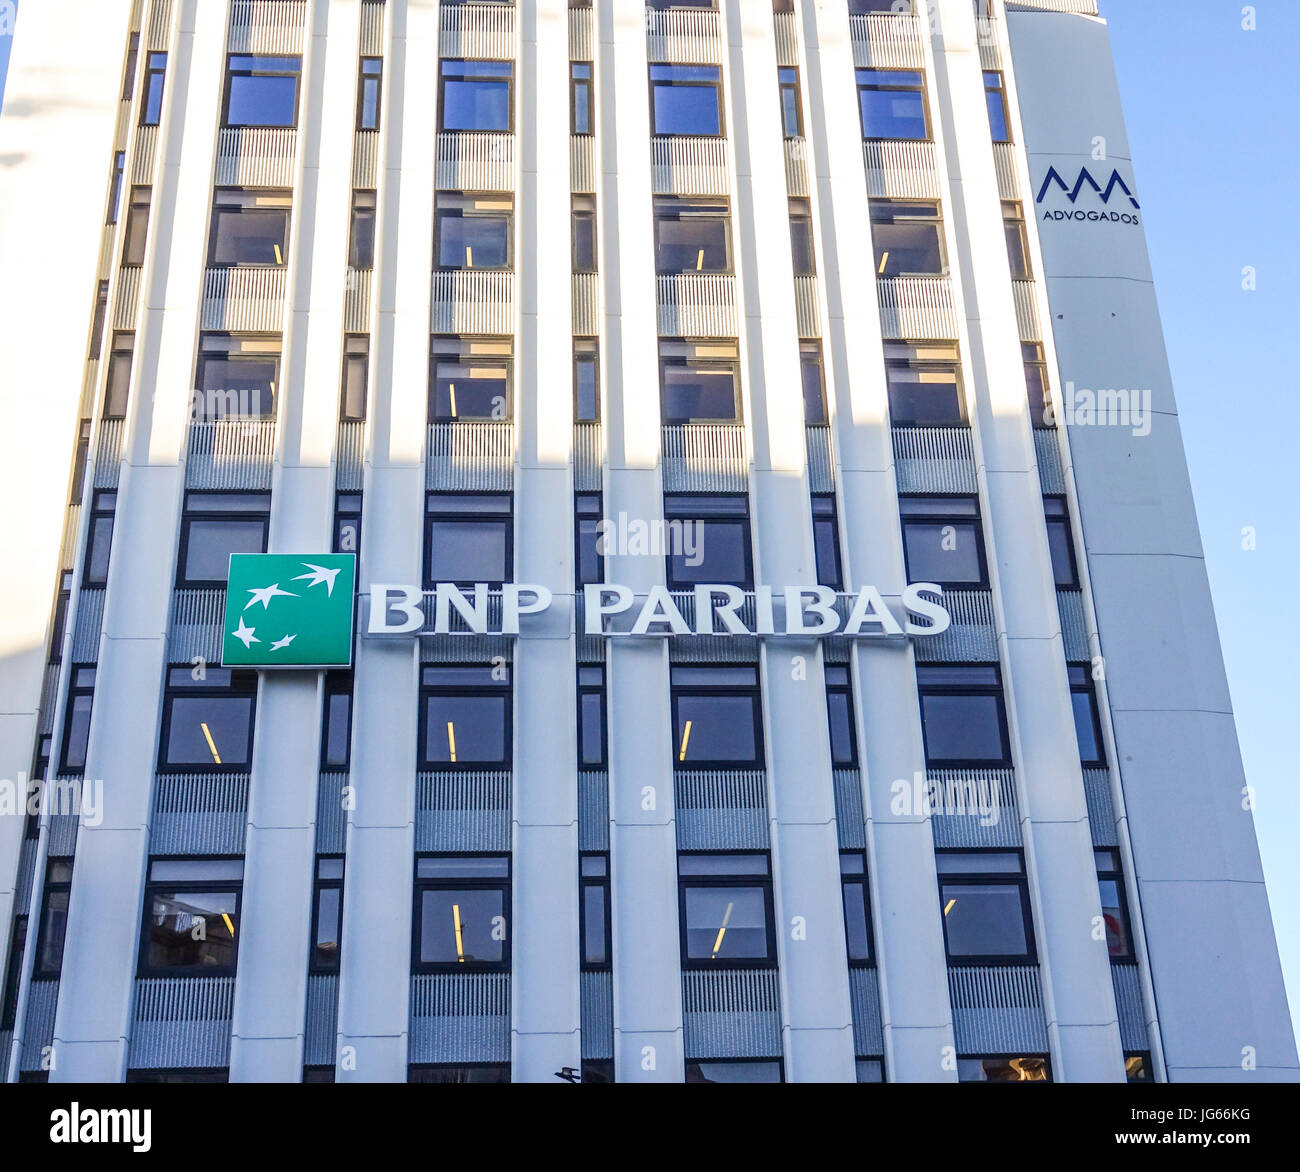 El banco BNP Paribas edificio en Lisboa - Lisboa - Portugal Foto de stock